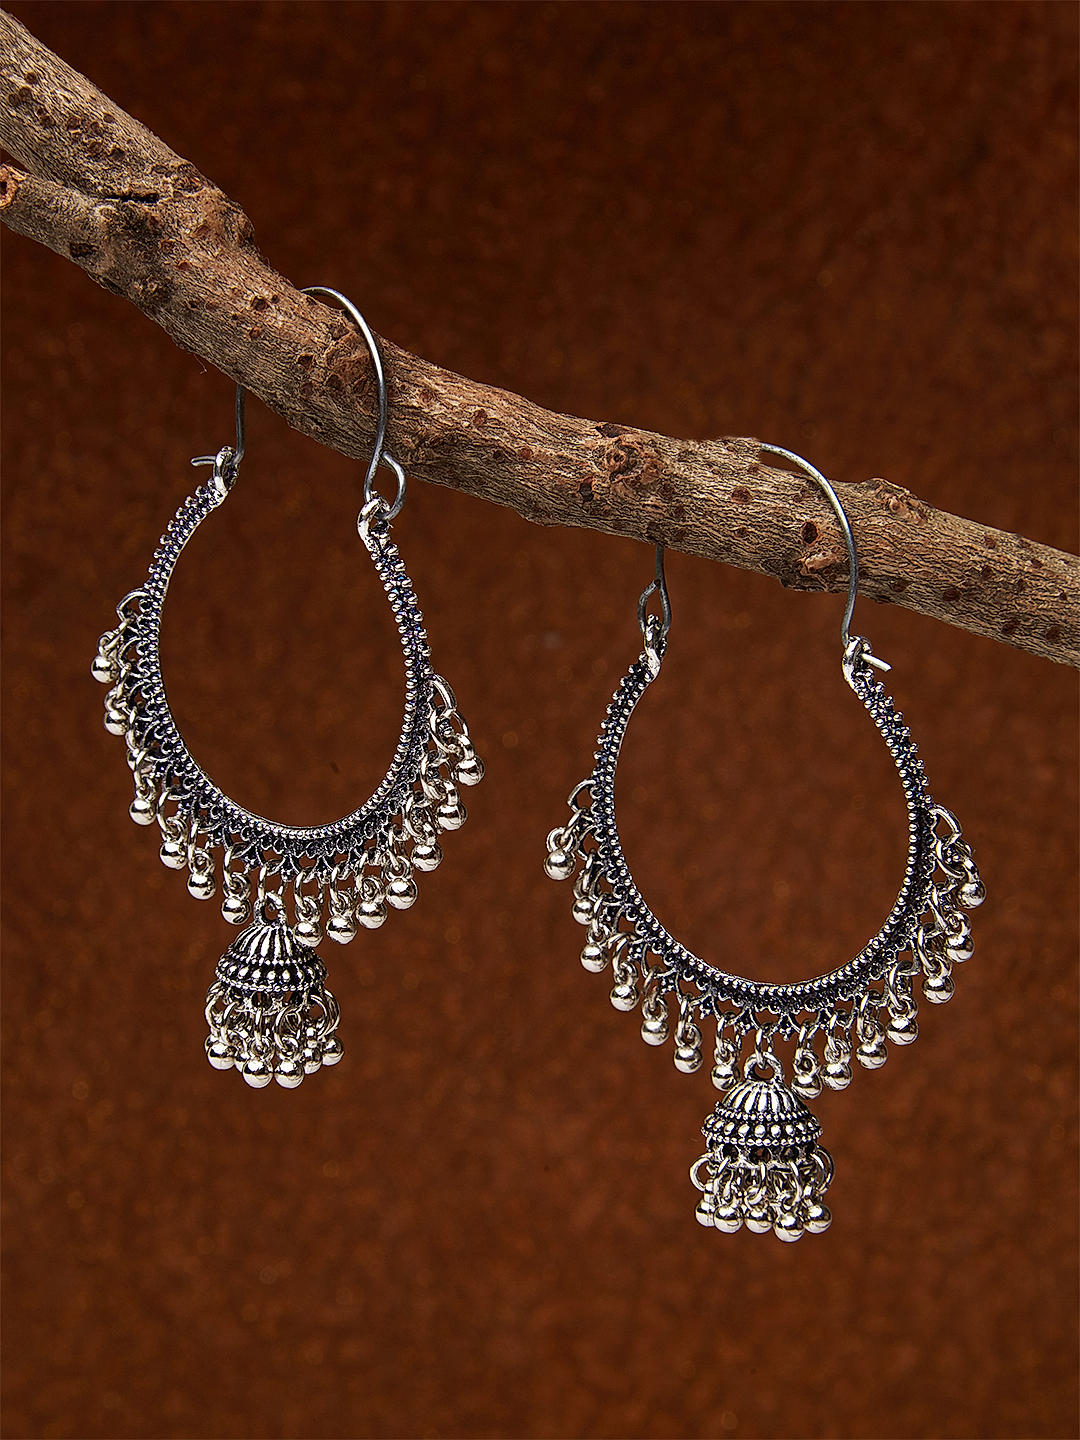 God Goddess Earrings, Venkatesh Swamy Earrings at Rs 250/pair | New Items  in Secunderabad | ID: 24045909255